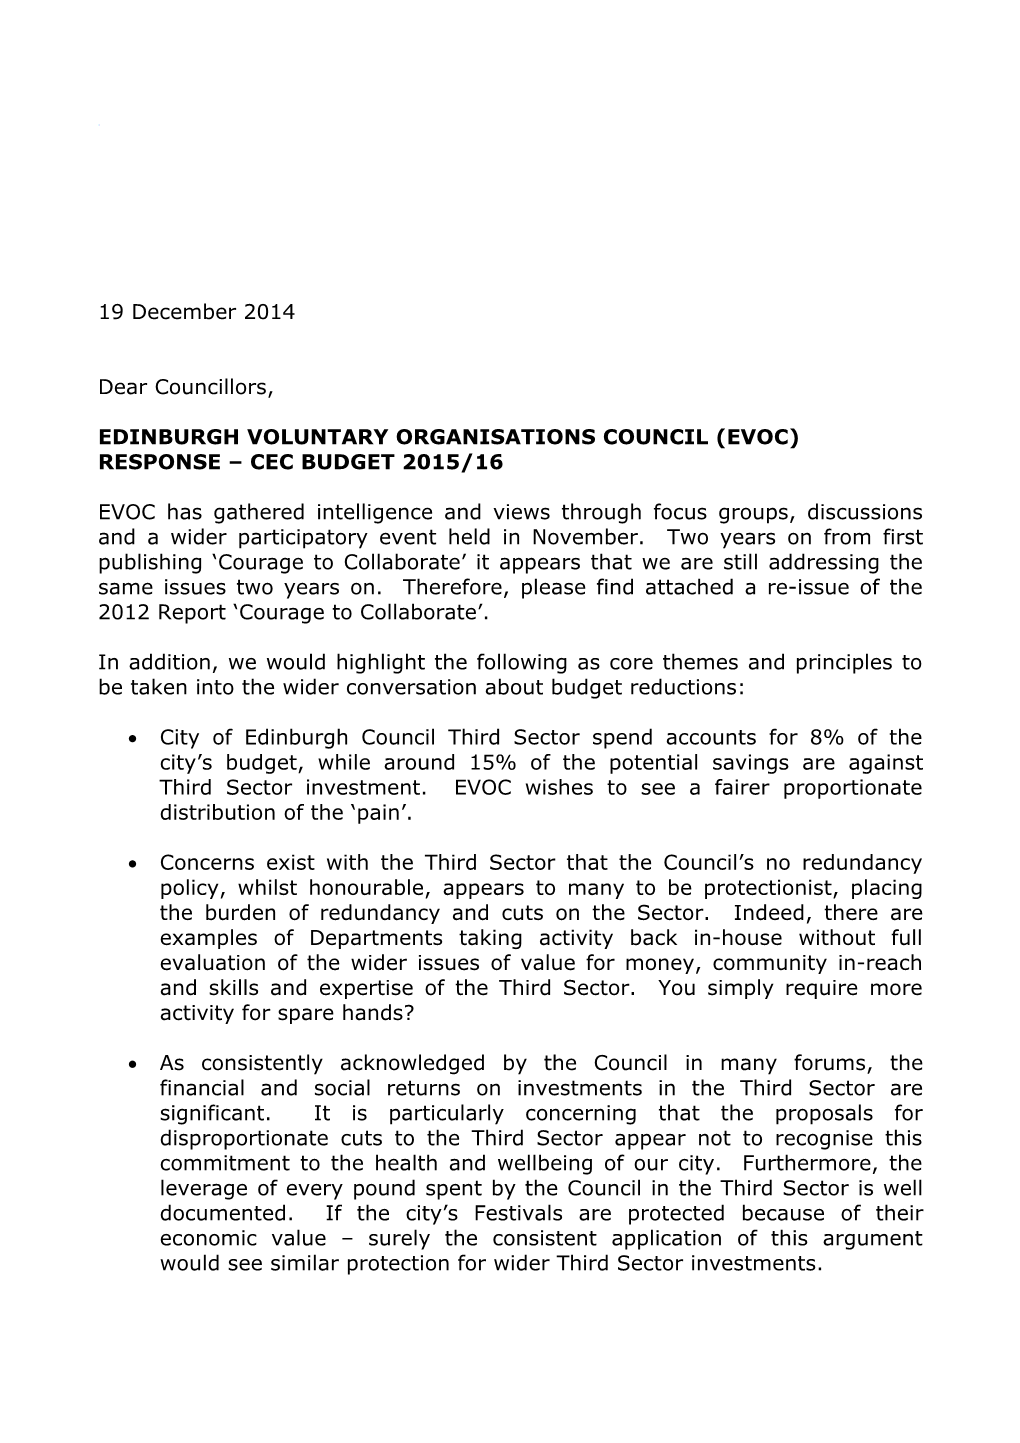 Edinburgh Voluntary Organisations Council (EVOC) RESPONSE CEC BUDGET 2015/16